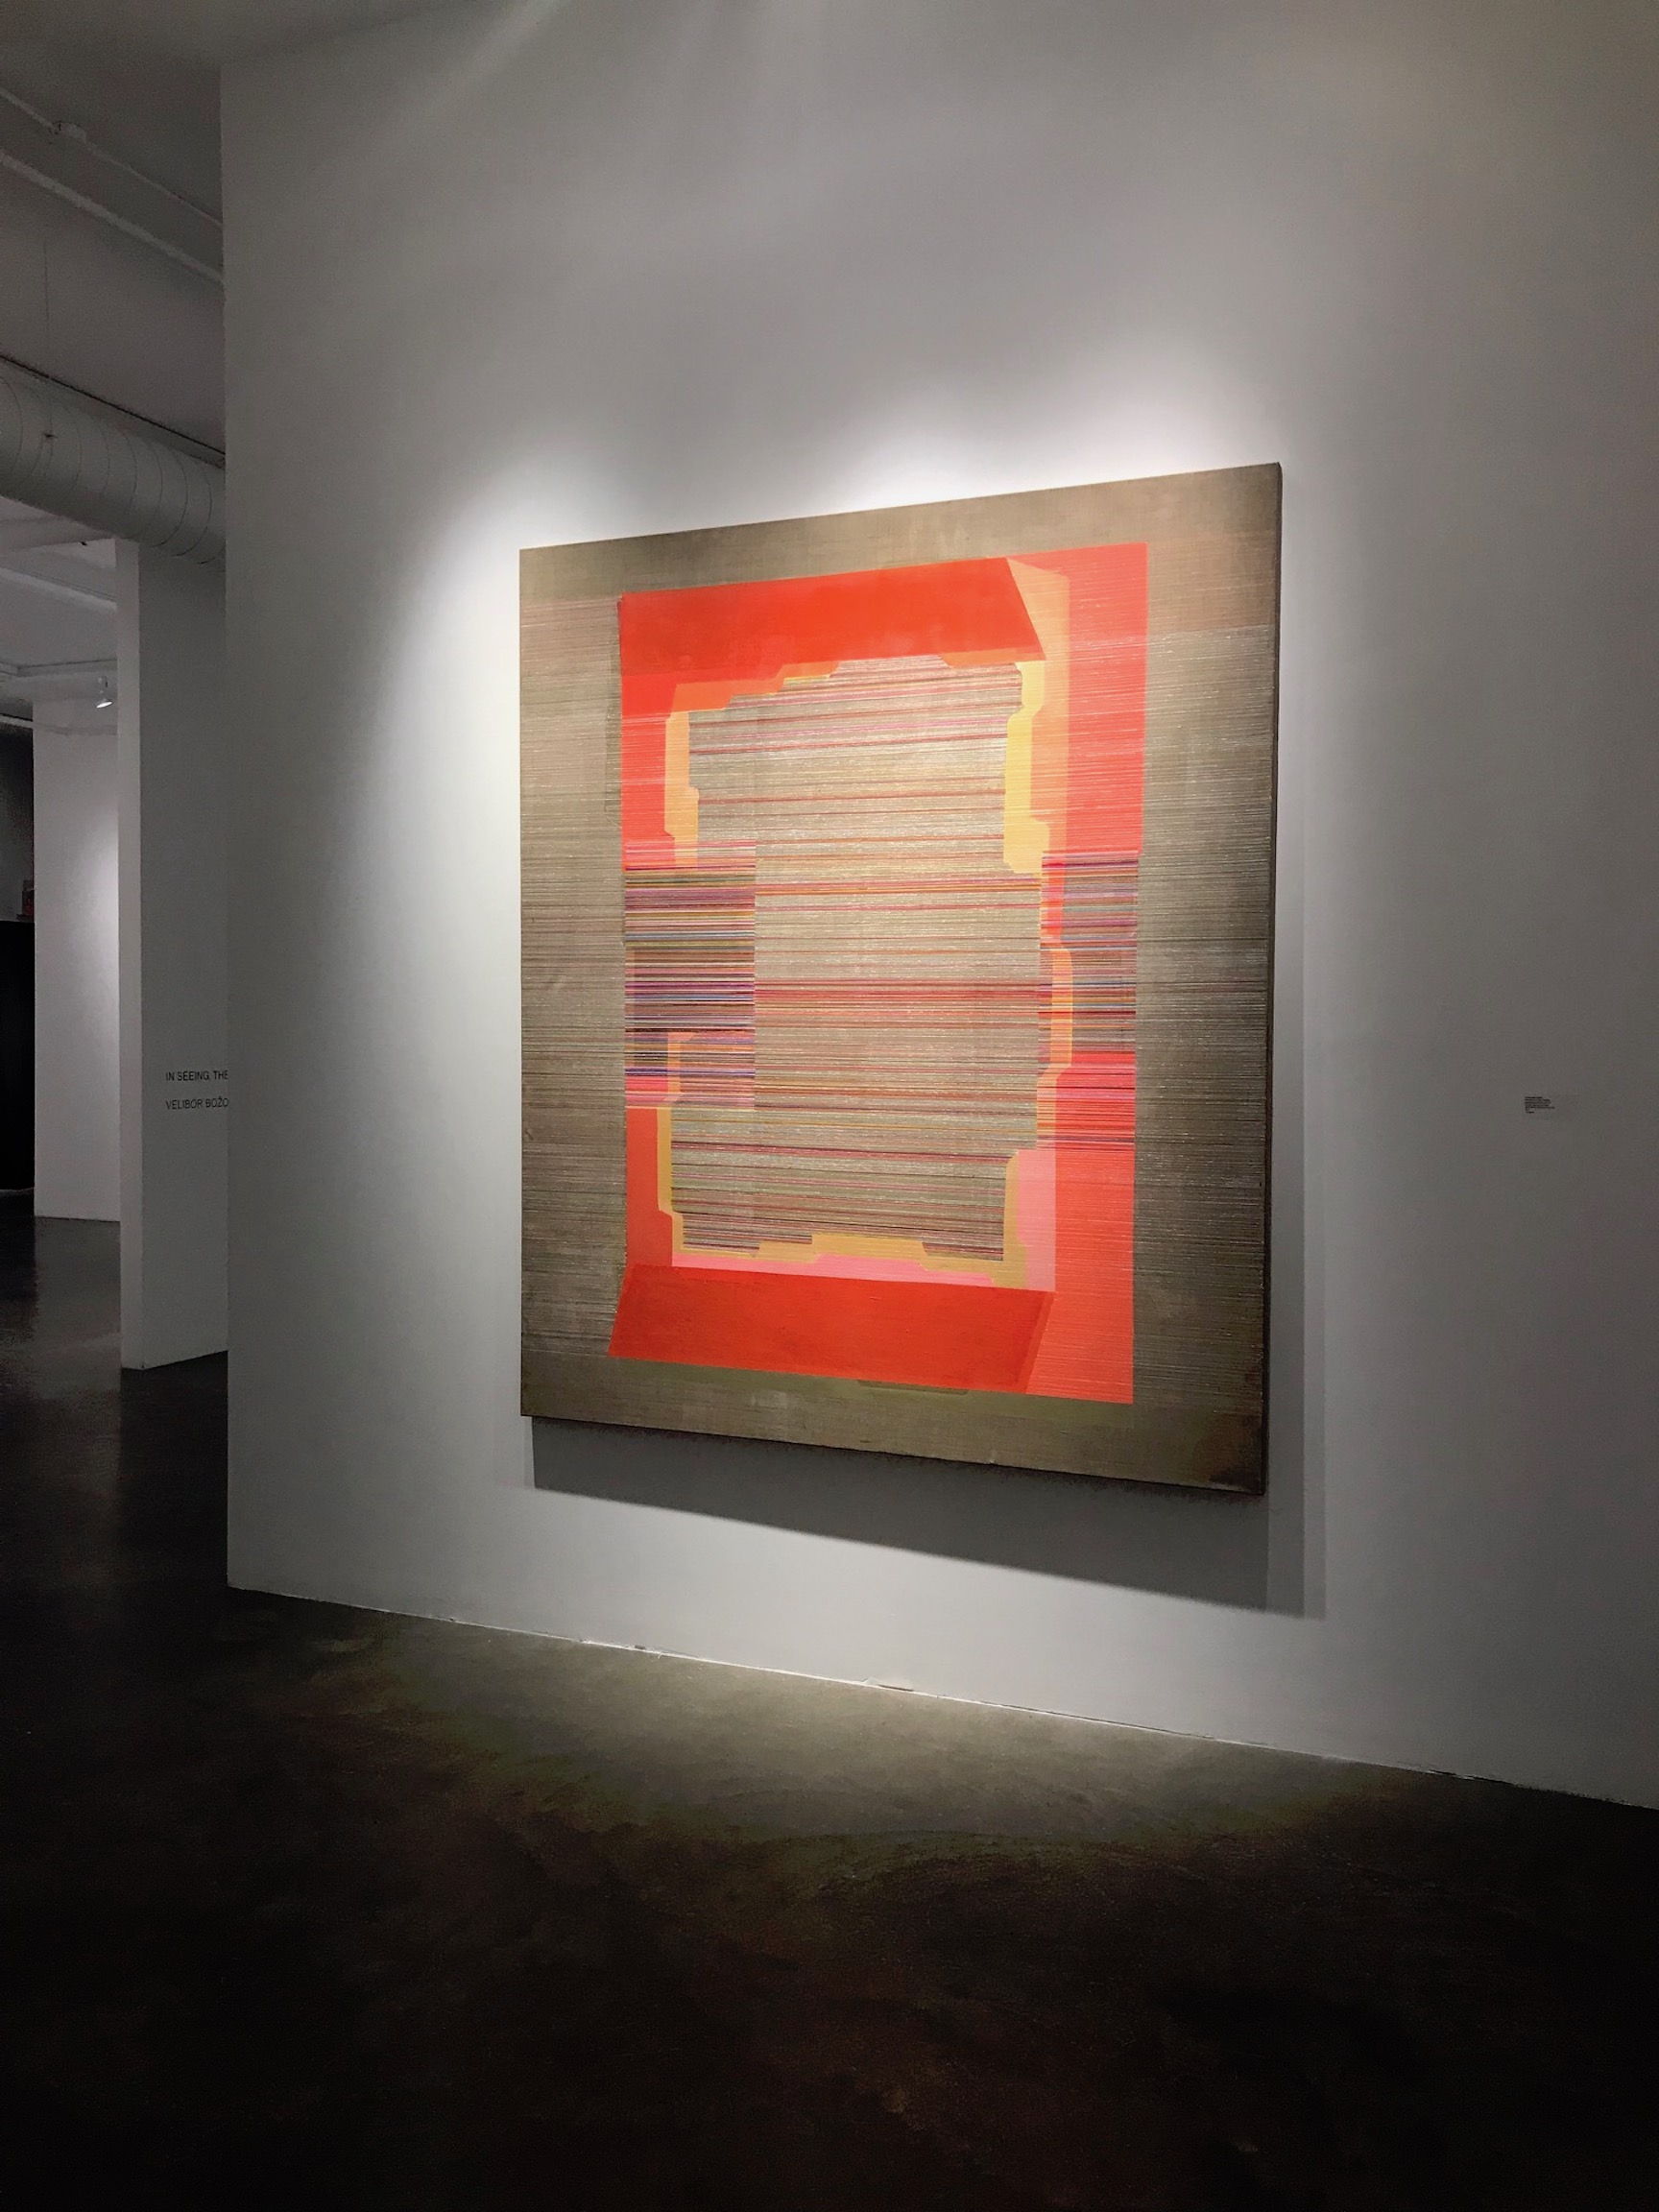 Patrick Mikhail Gallery, 2019 by Antonietta Grassi.